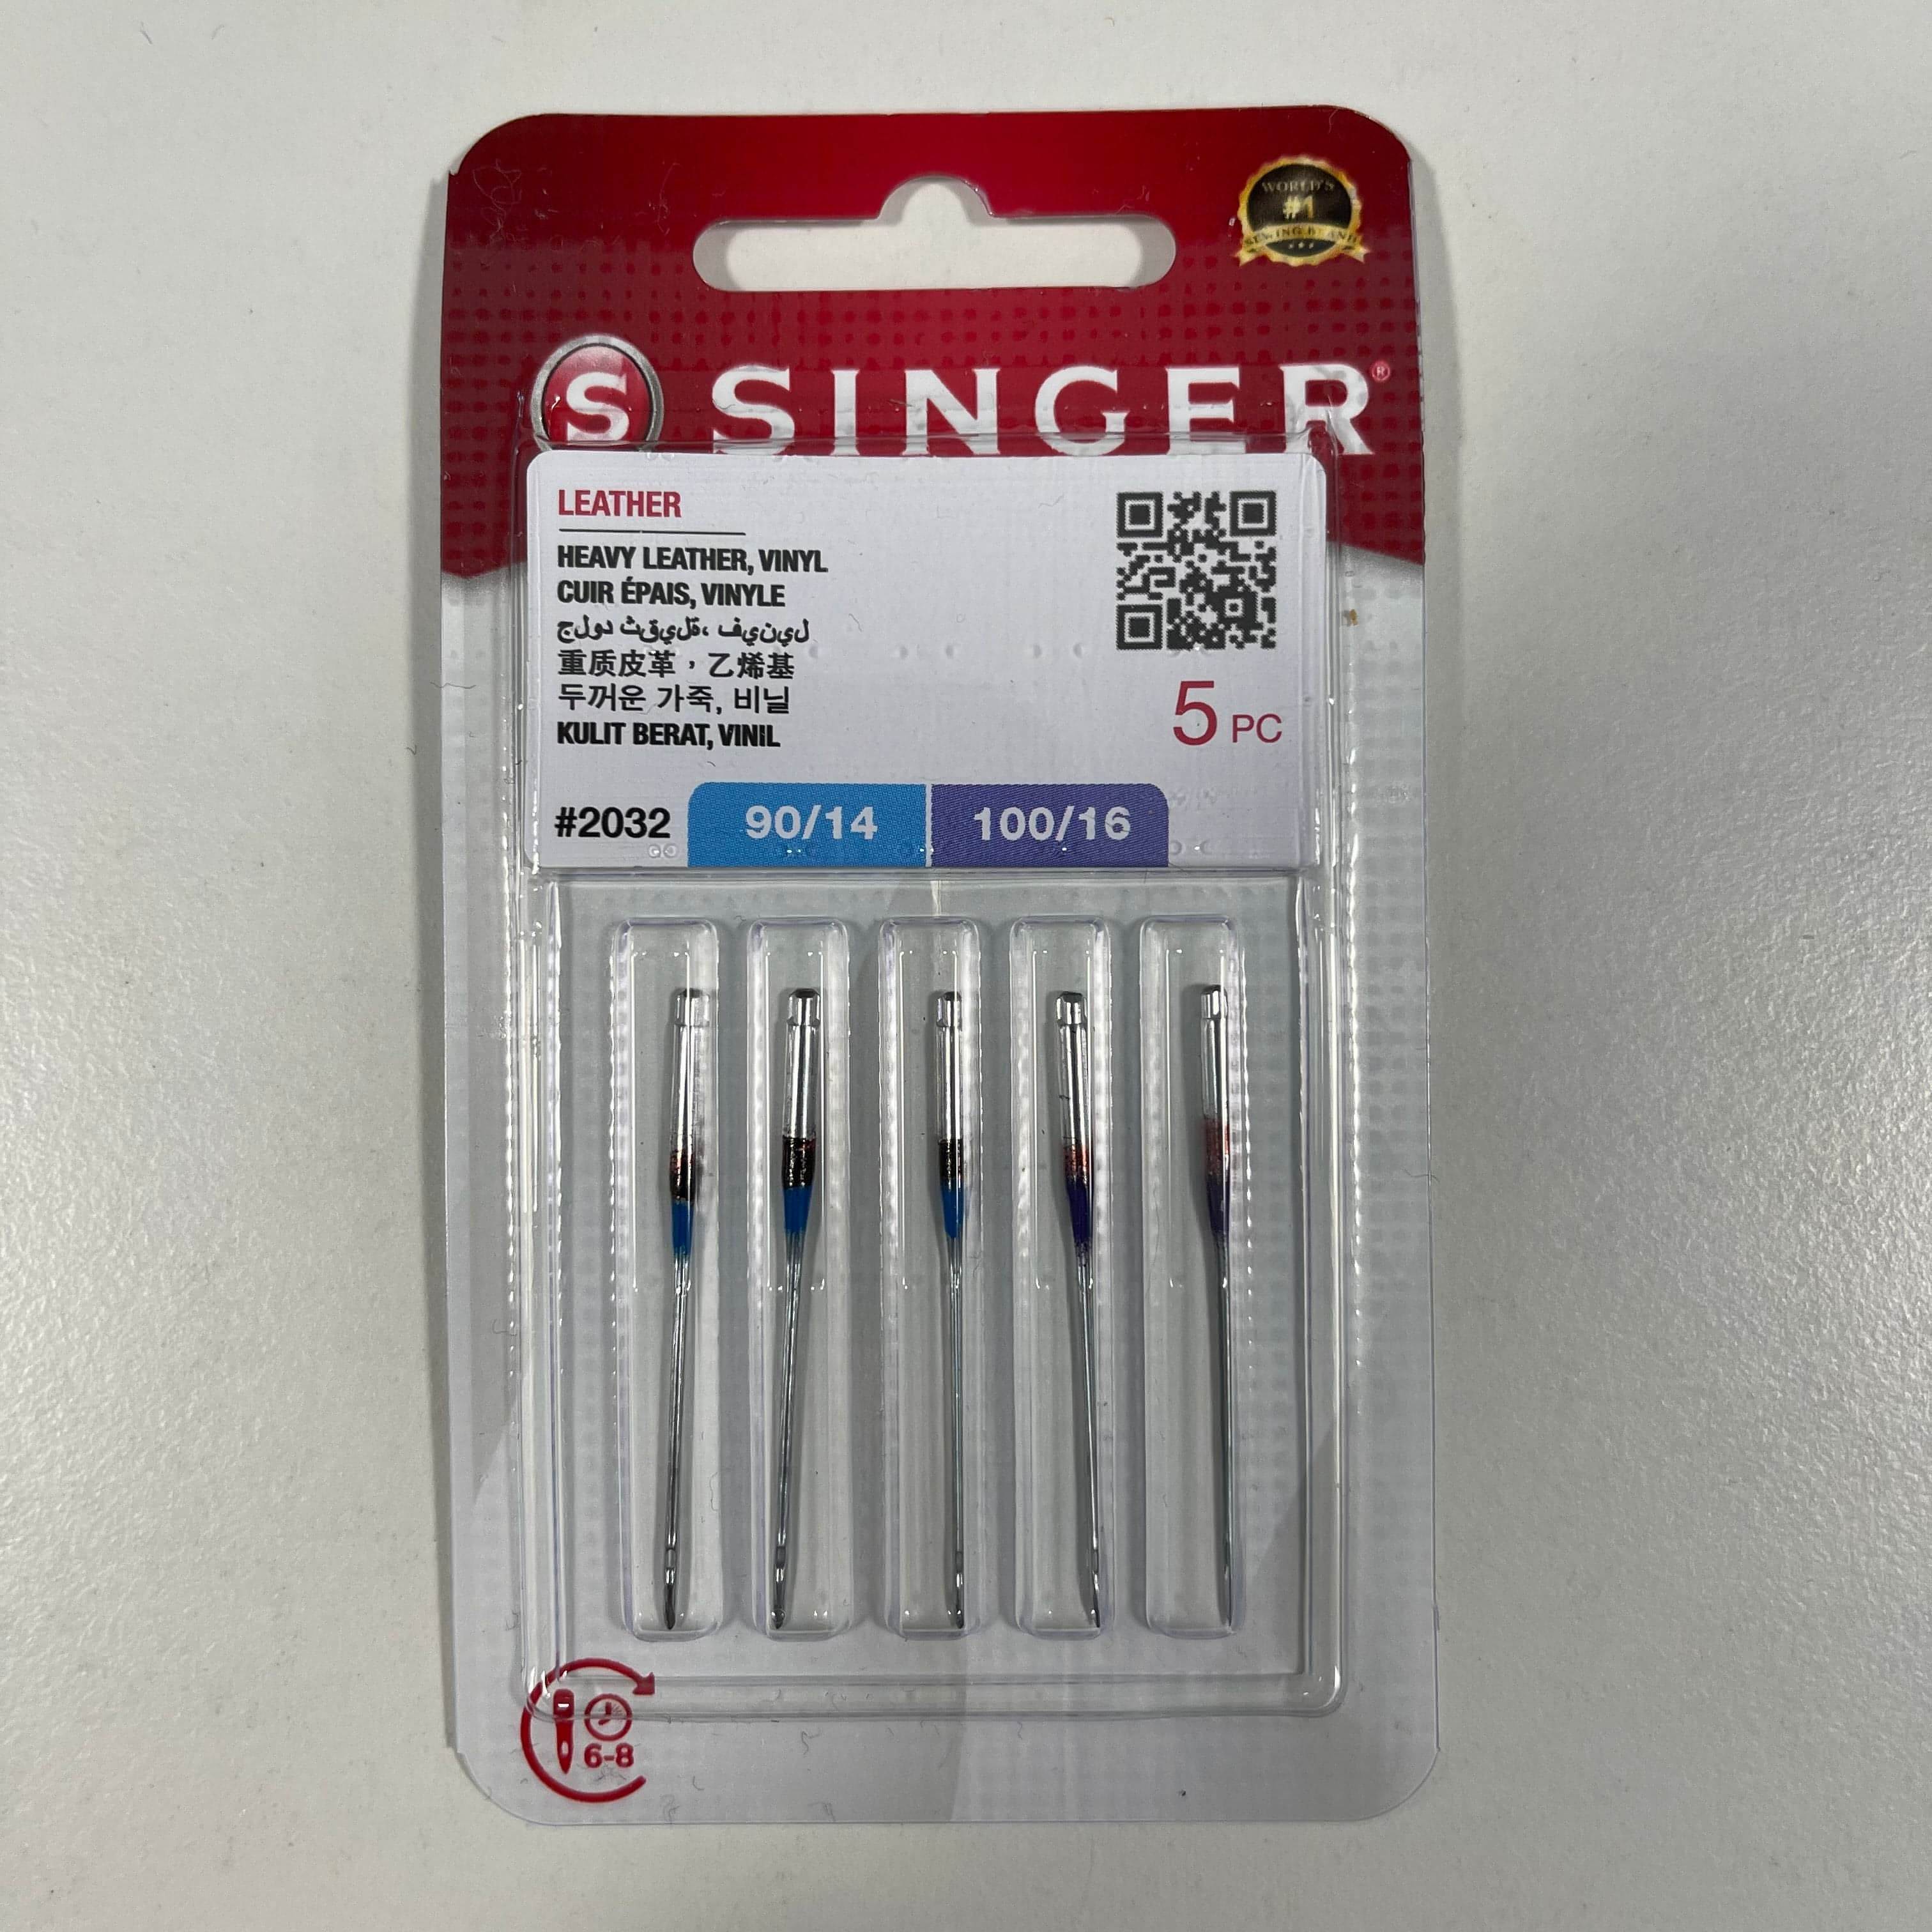 Singer Sewing Machine Needles 2020, Sewing Needles, 80/11, 90/14